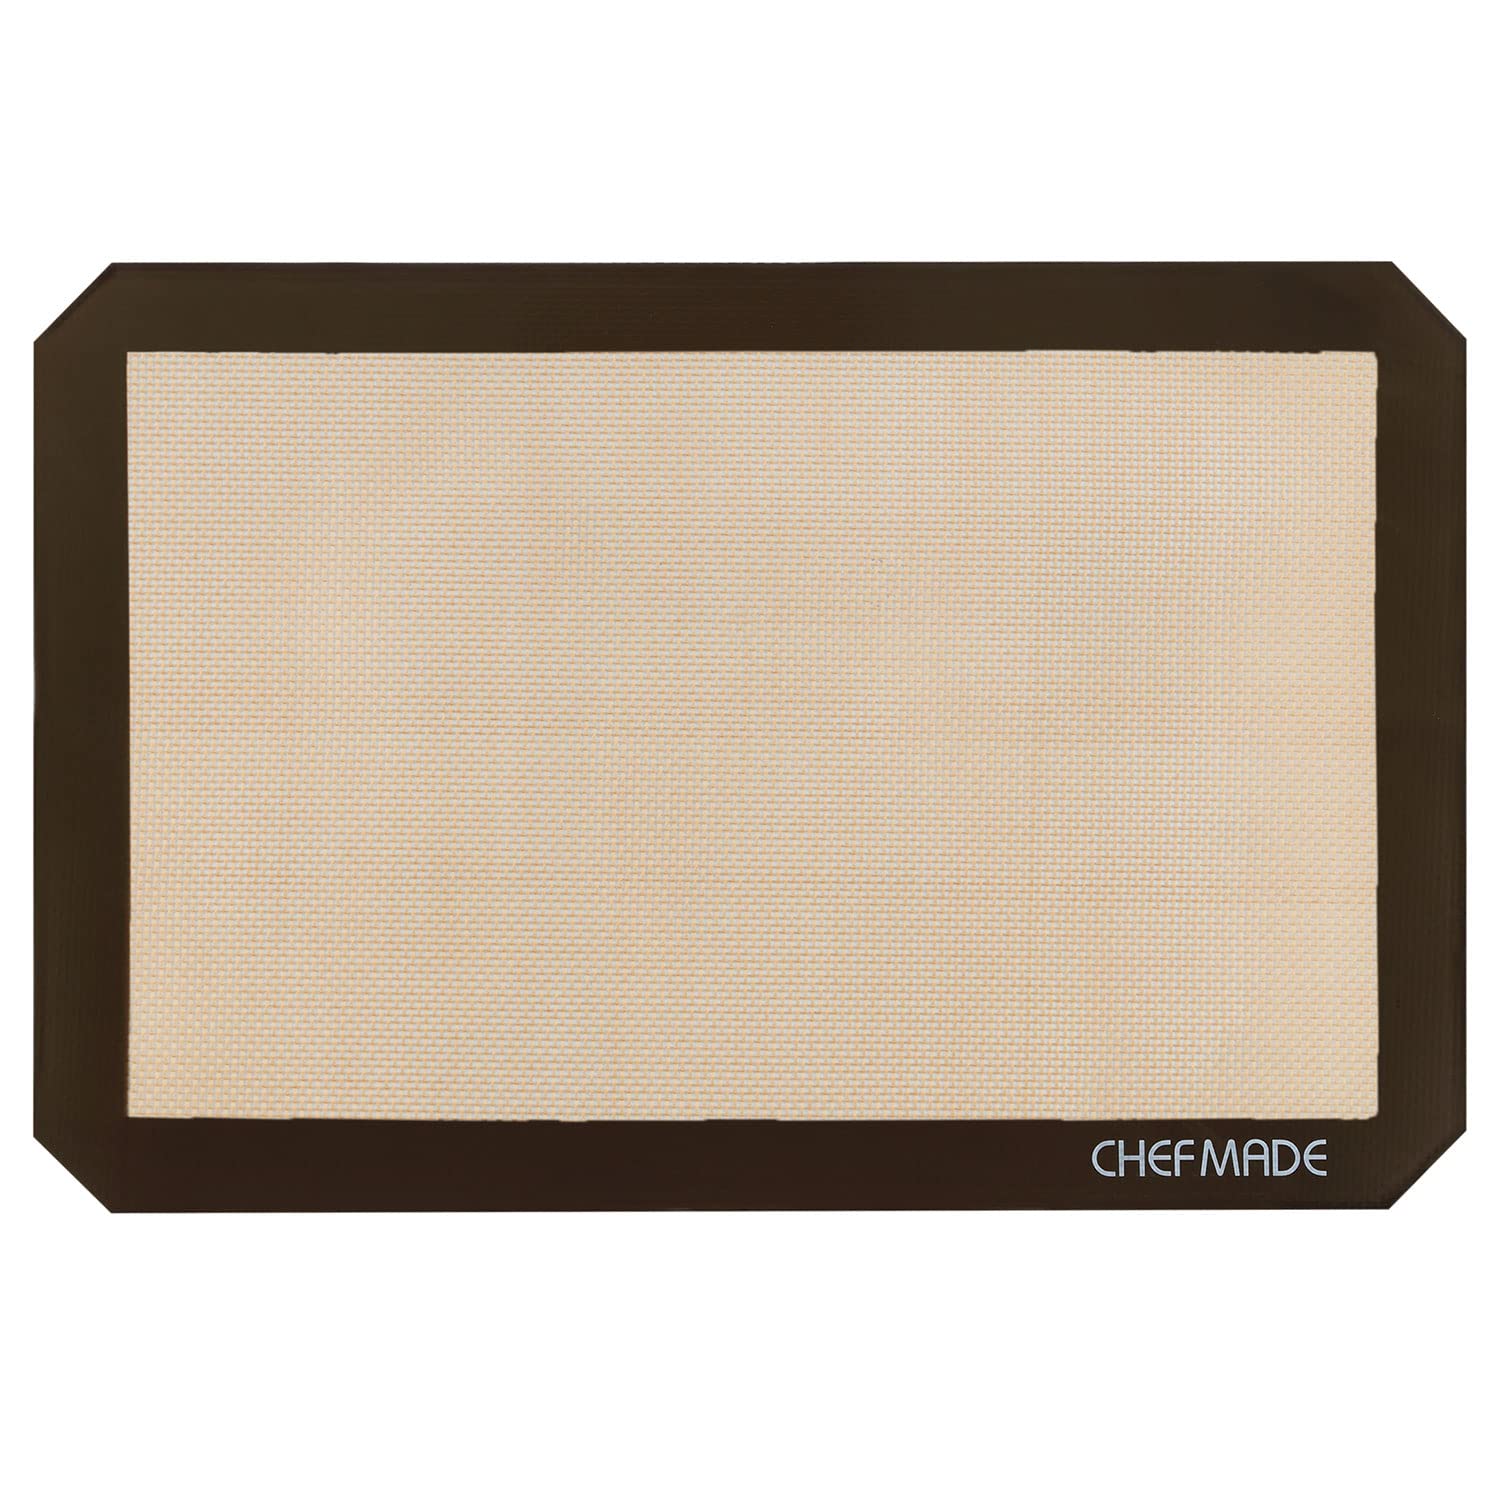 Baking mat CRISPYBAKE J4173214 46 x 26 cm, silicone, Tefal